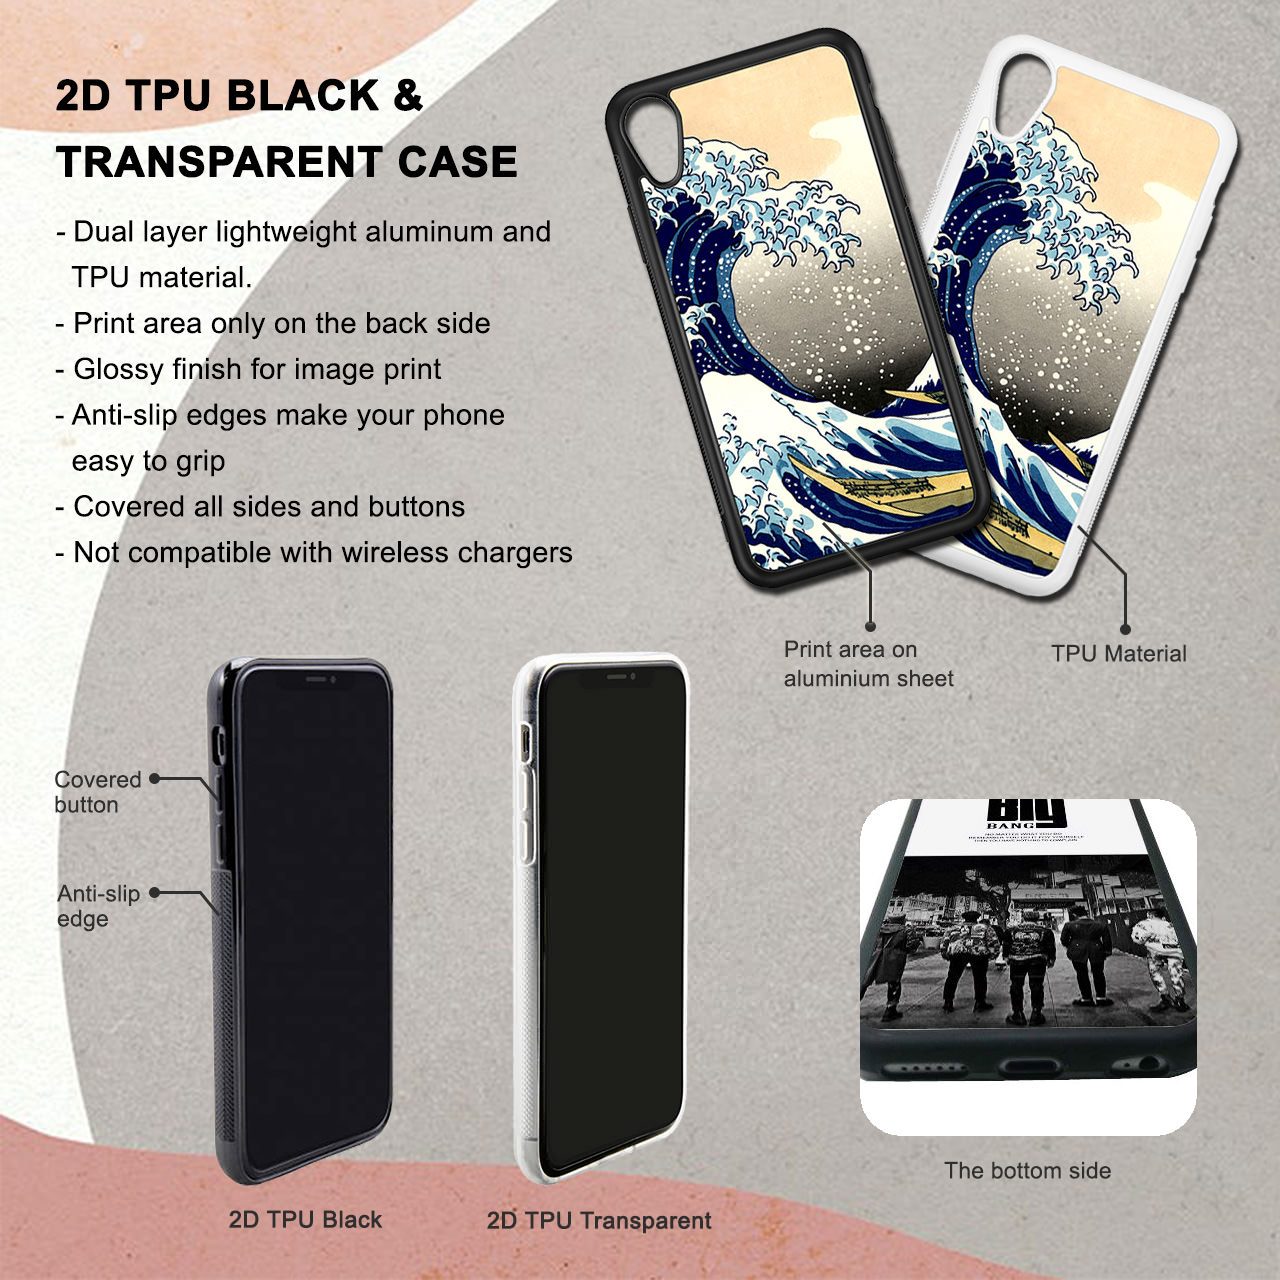 Zoro The Dragon Swordsman iPhone 11 Pro Case